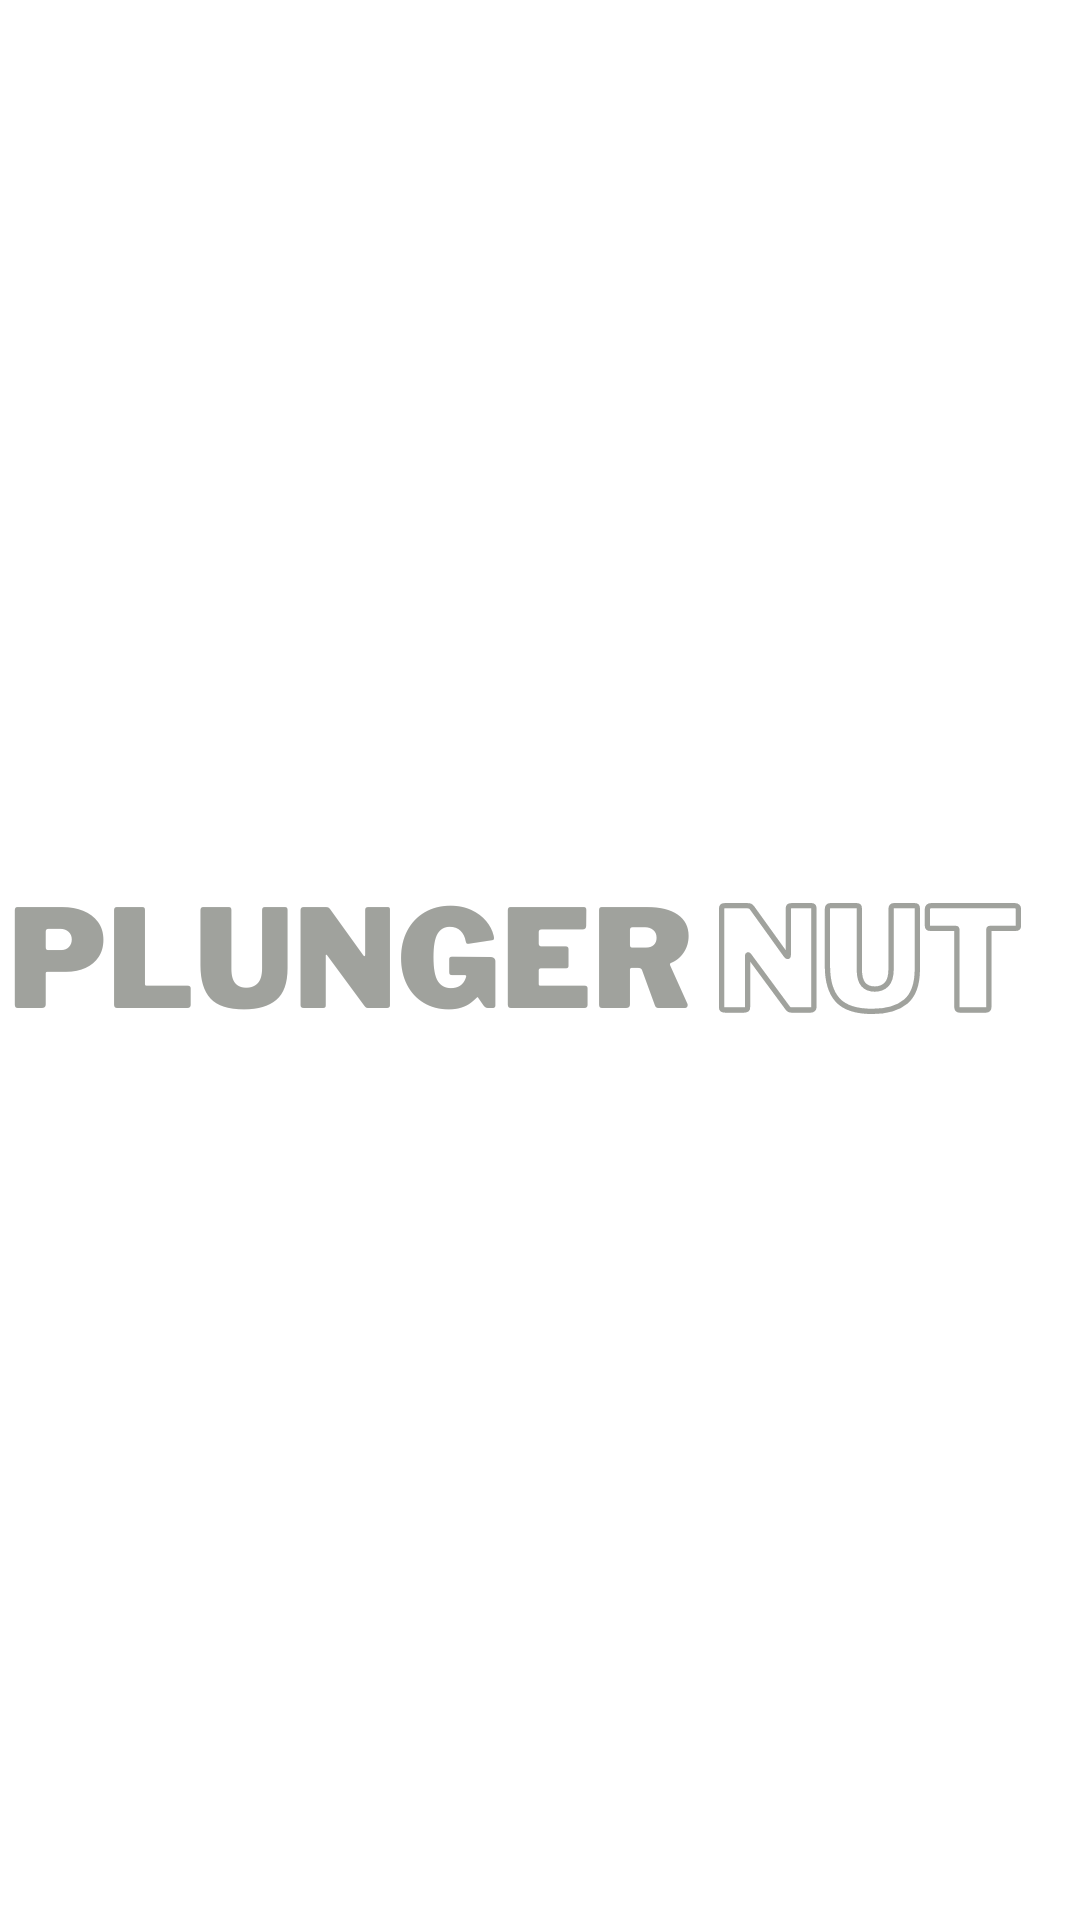 Plunger Nut Title